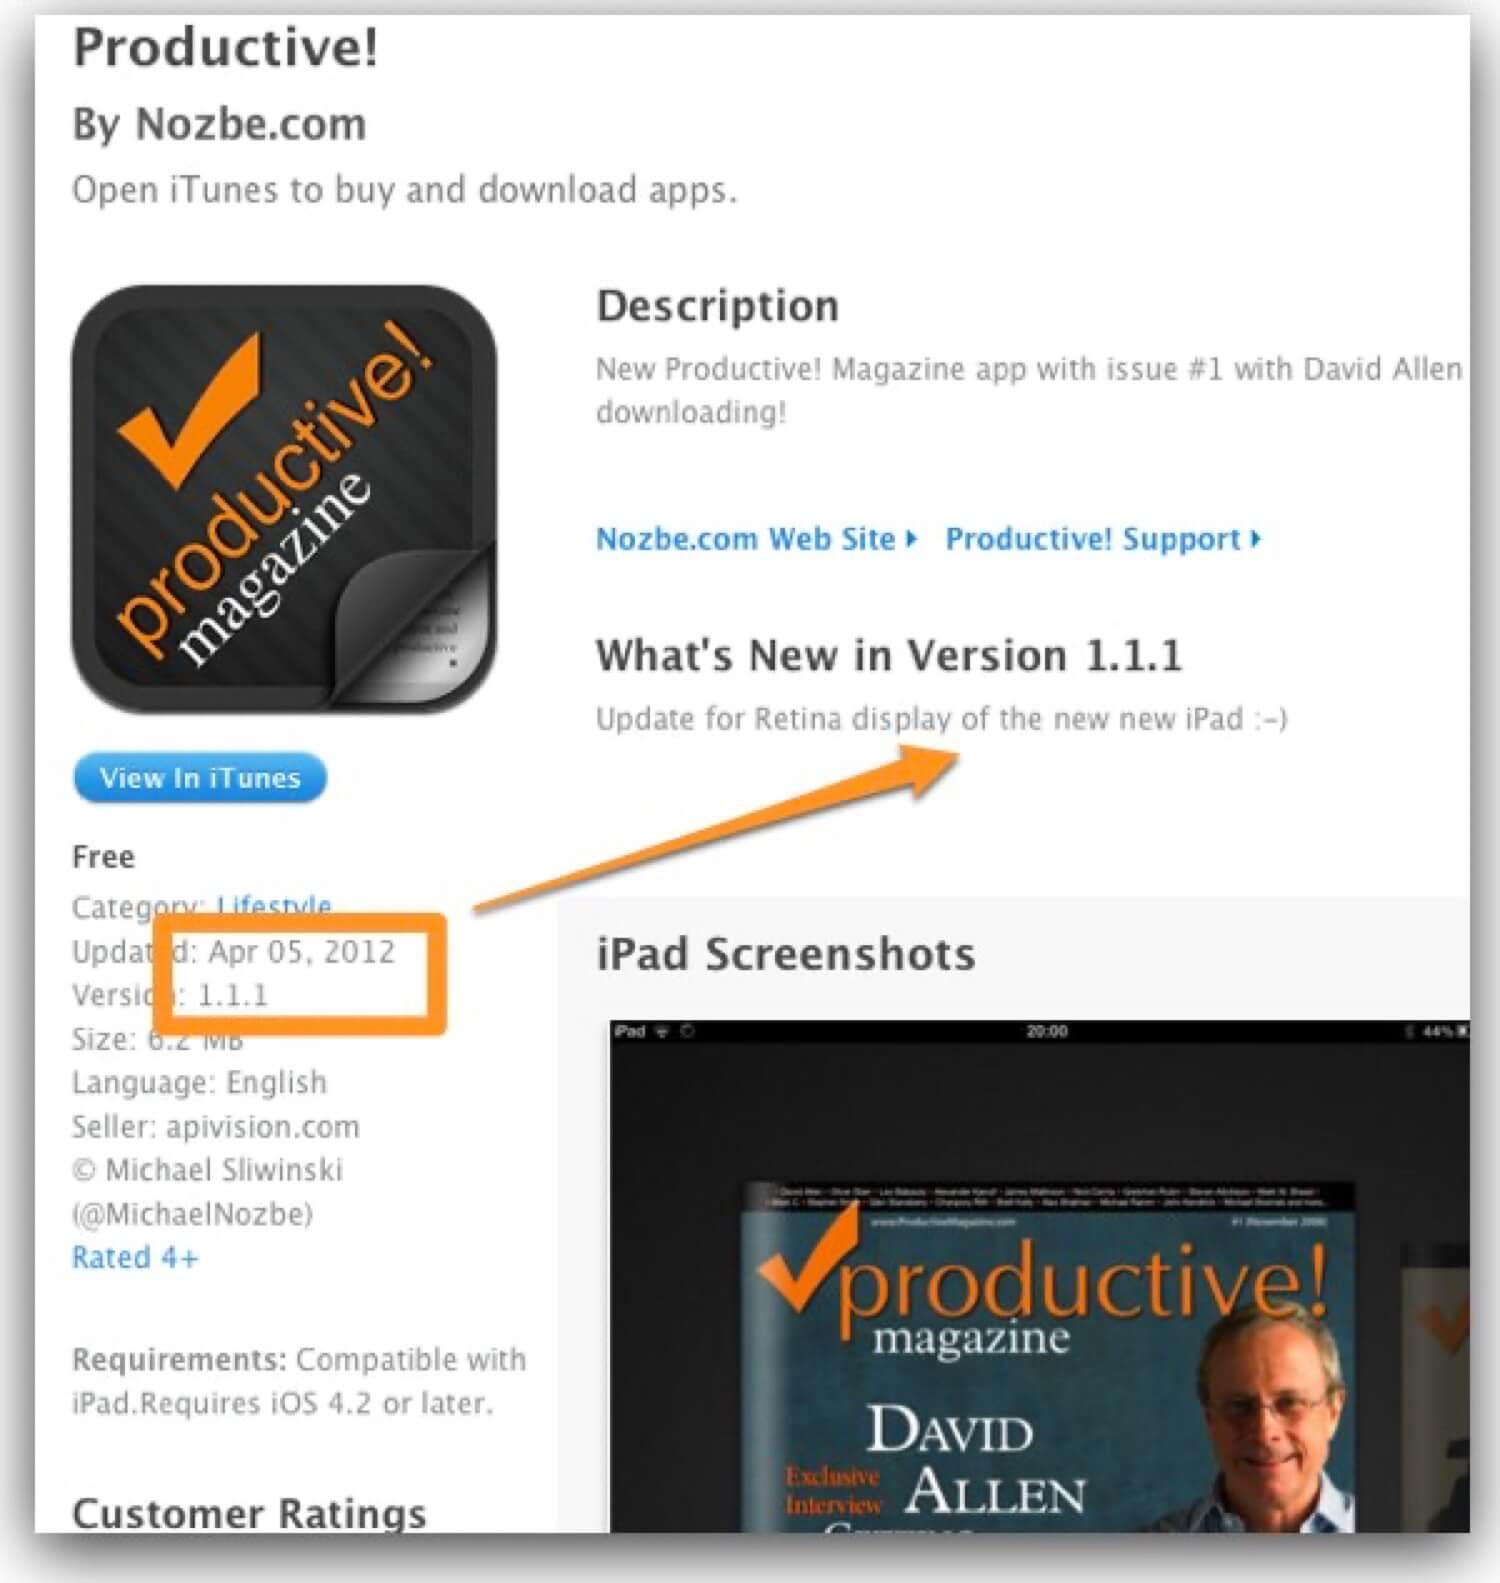 Productive! Magazine iPad app updated for the Retina Display of the iPad3